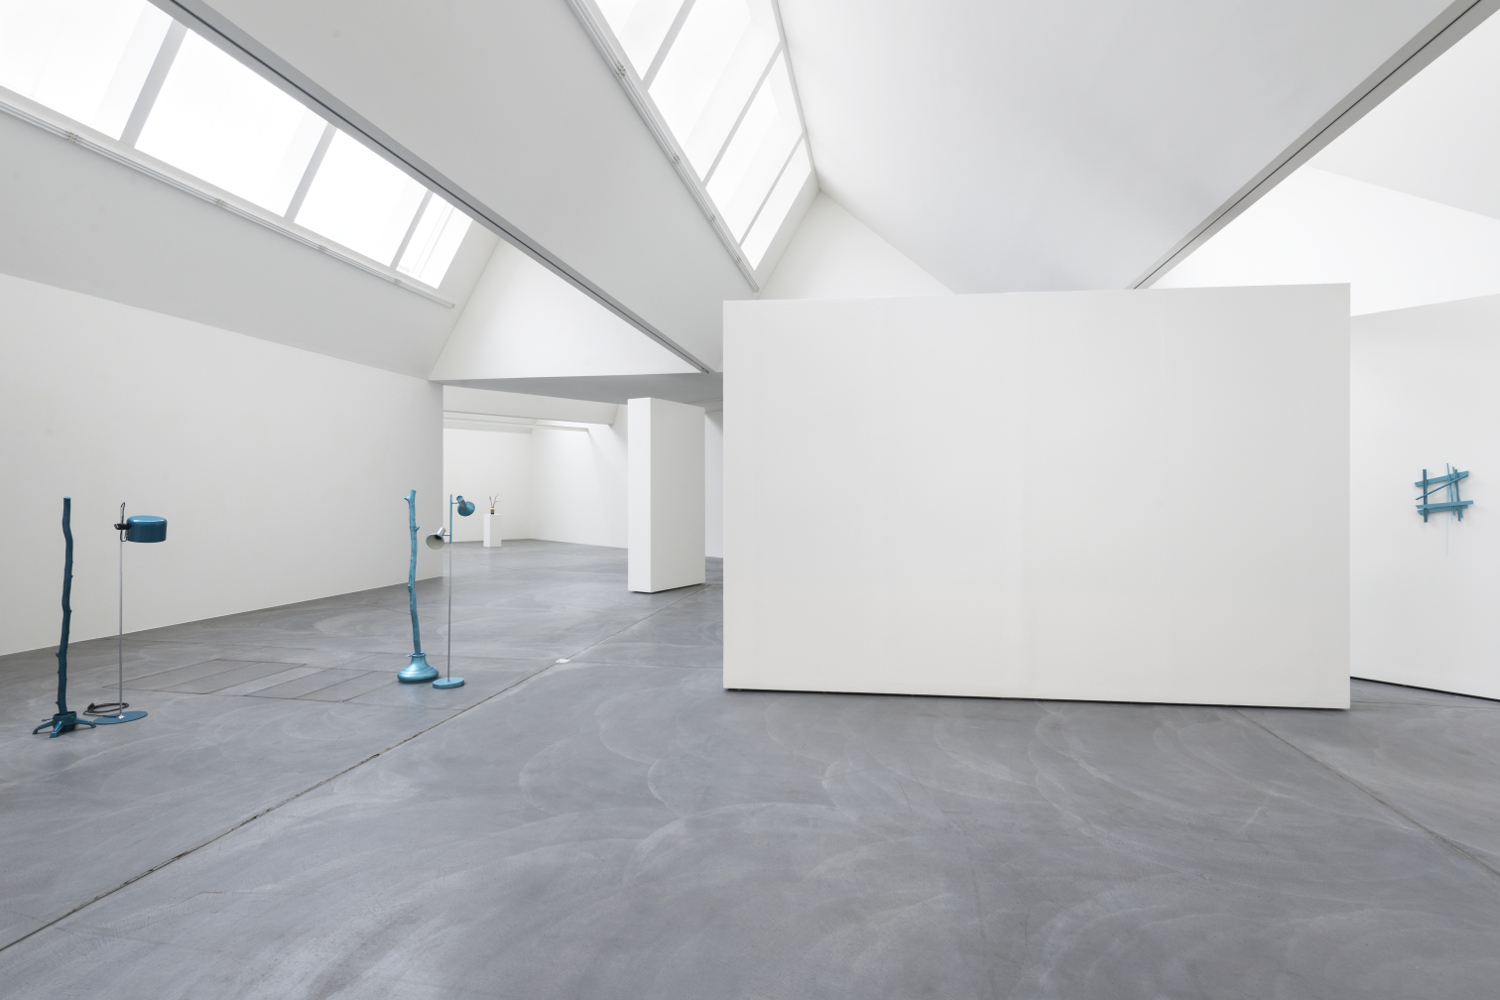 Florian Slotawa at von Bartha, Basel, 9 April - 28 May 2016, installation view, courtesy of von Bartha gallery, photo Andreas Zimmermann